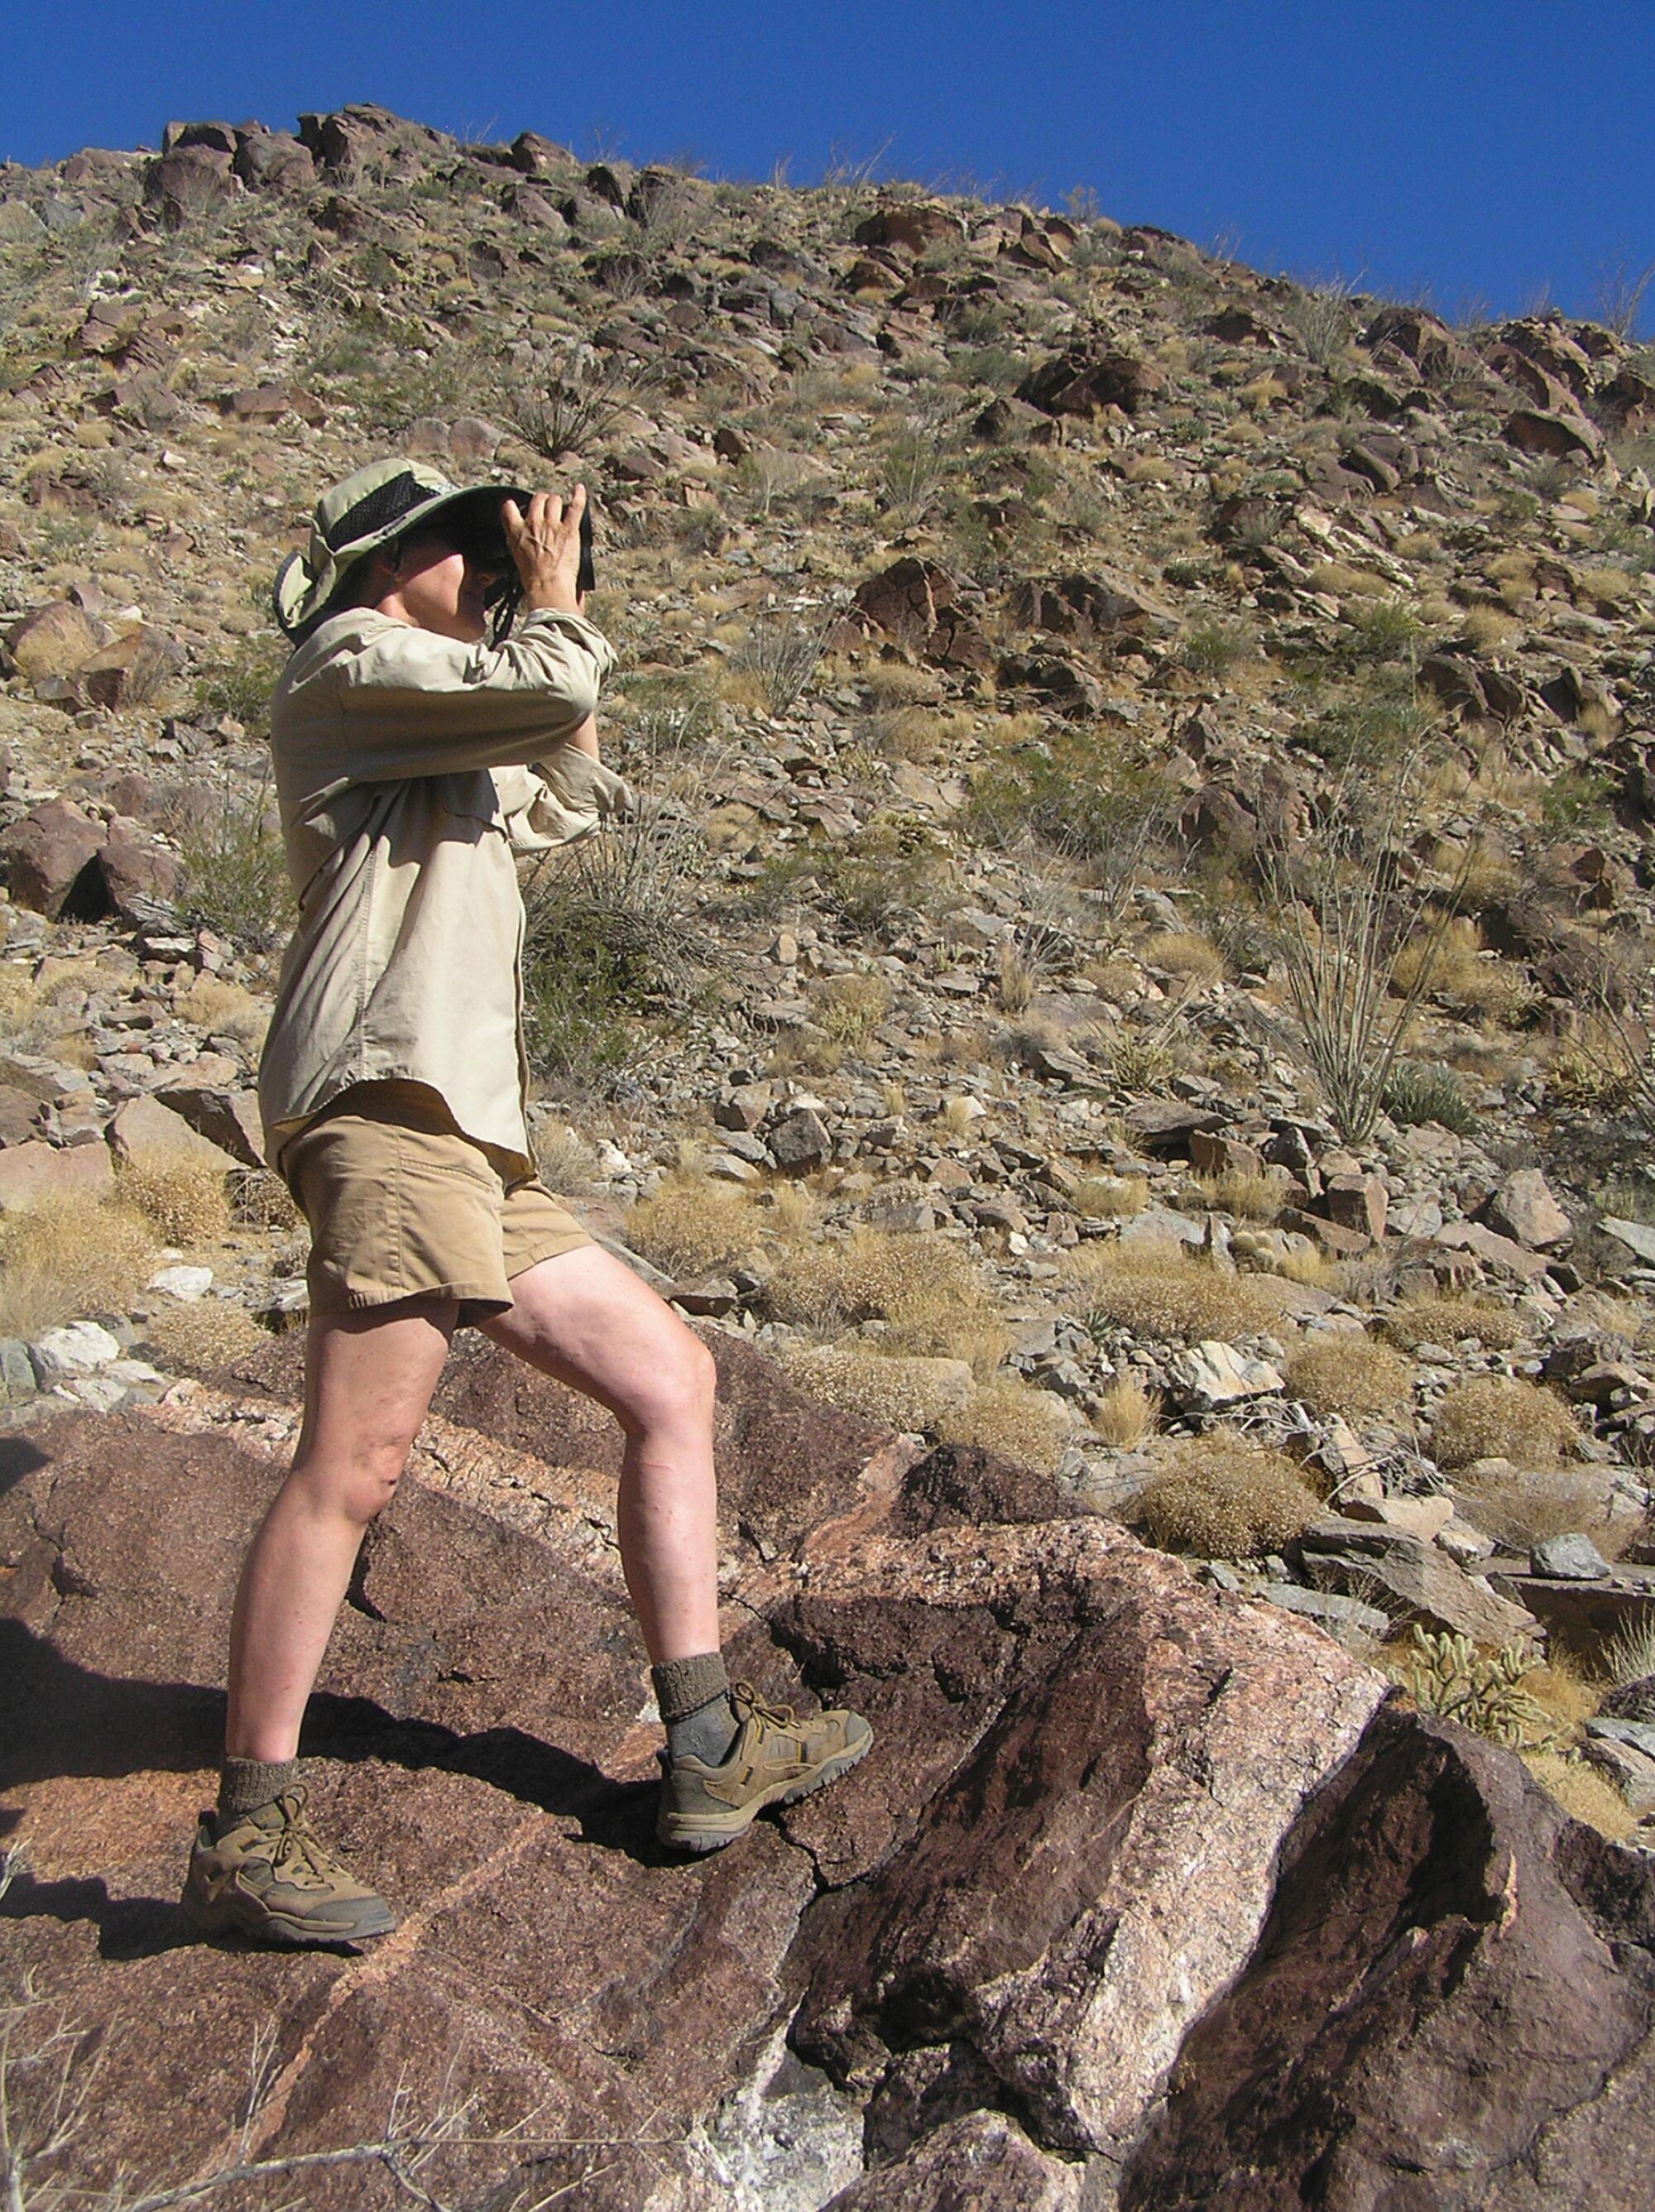 Callie Mack looks through binoculars while standing on a rock.